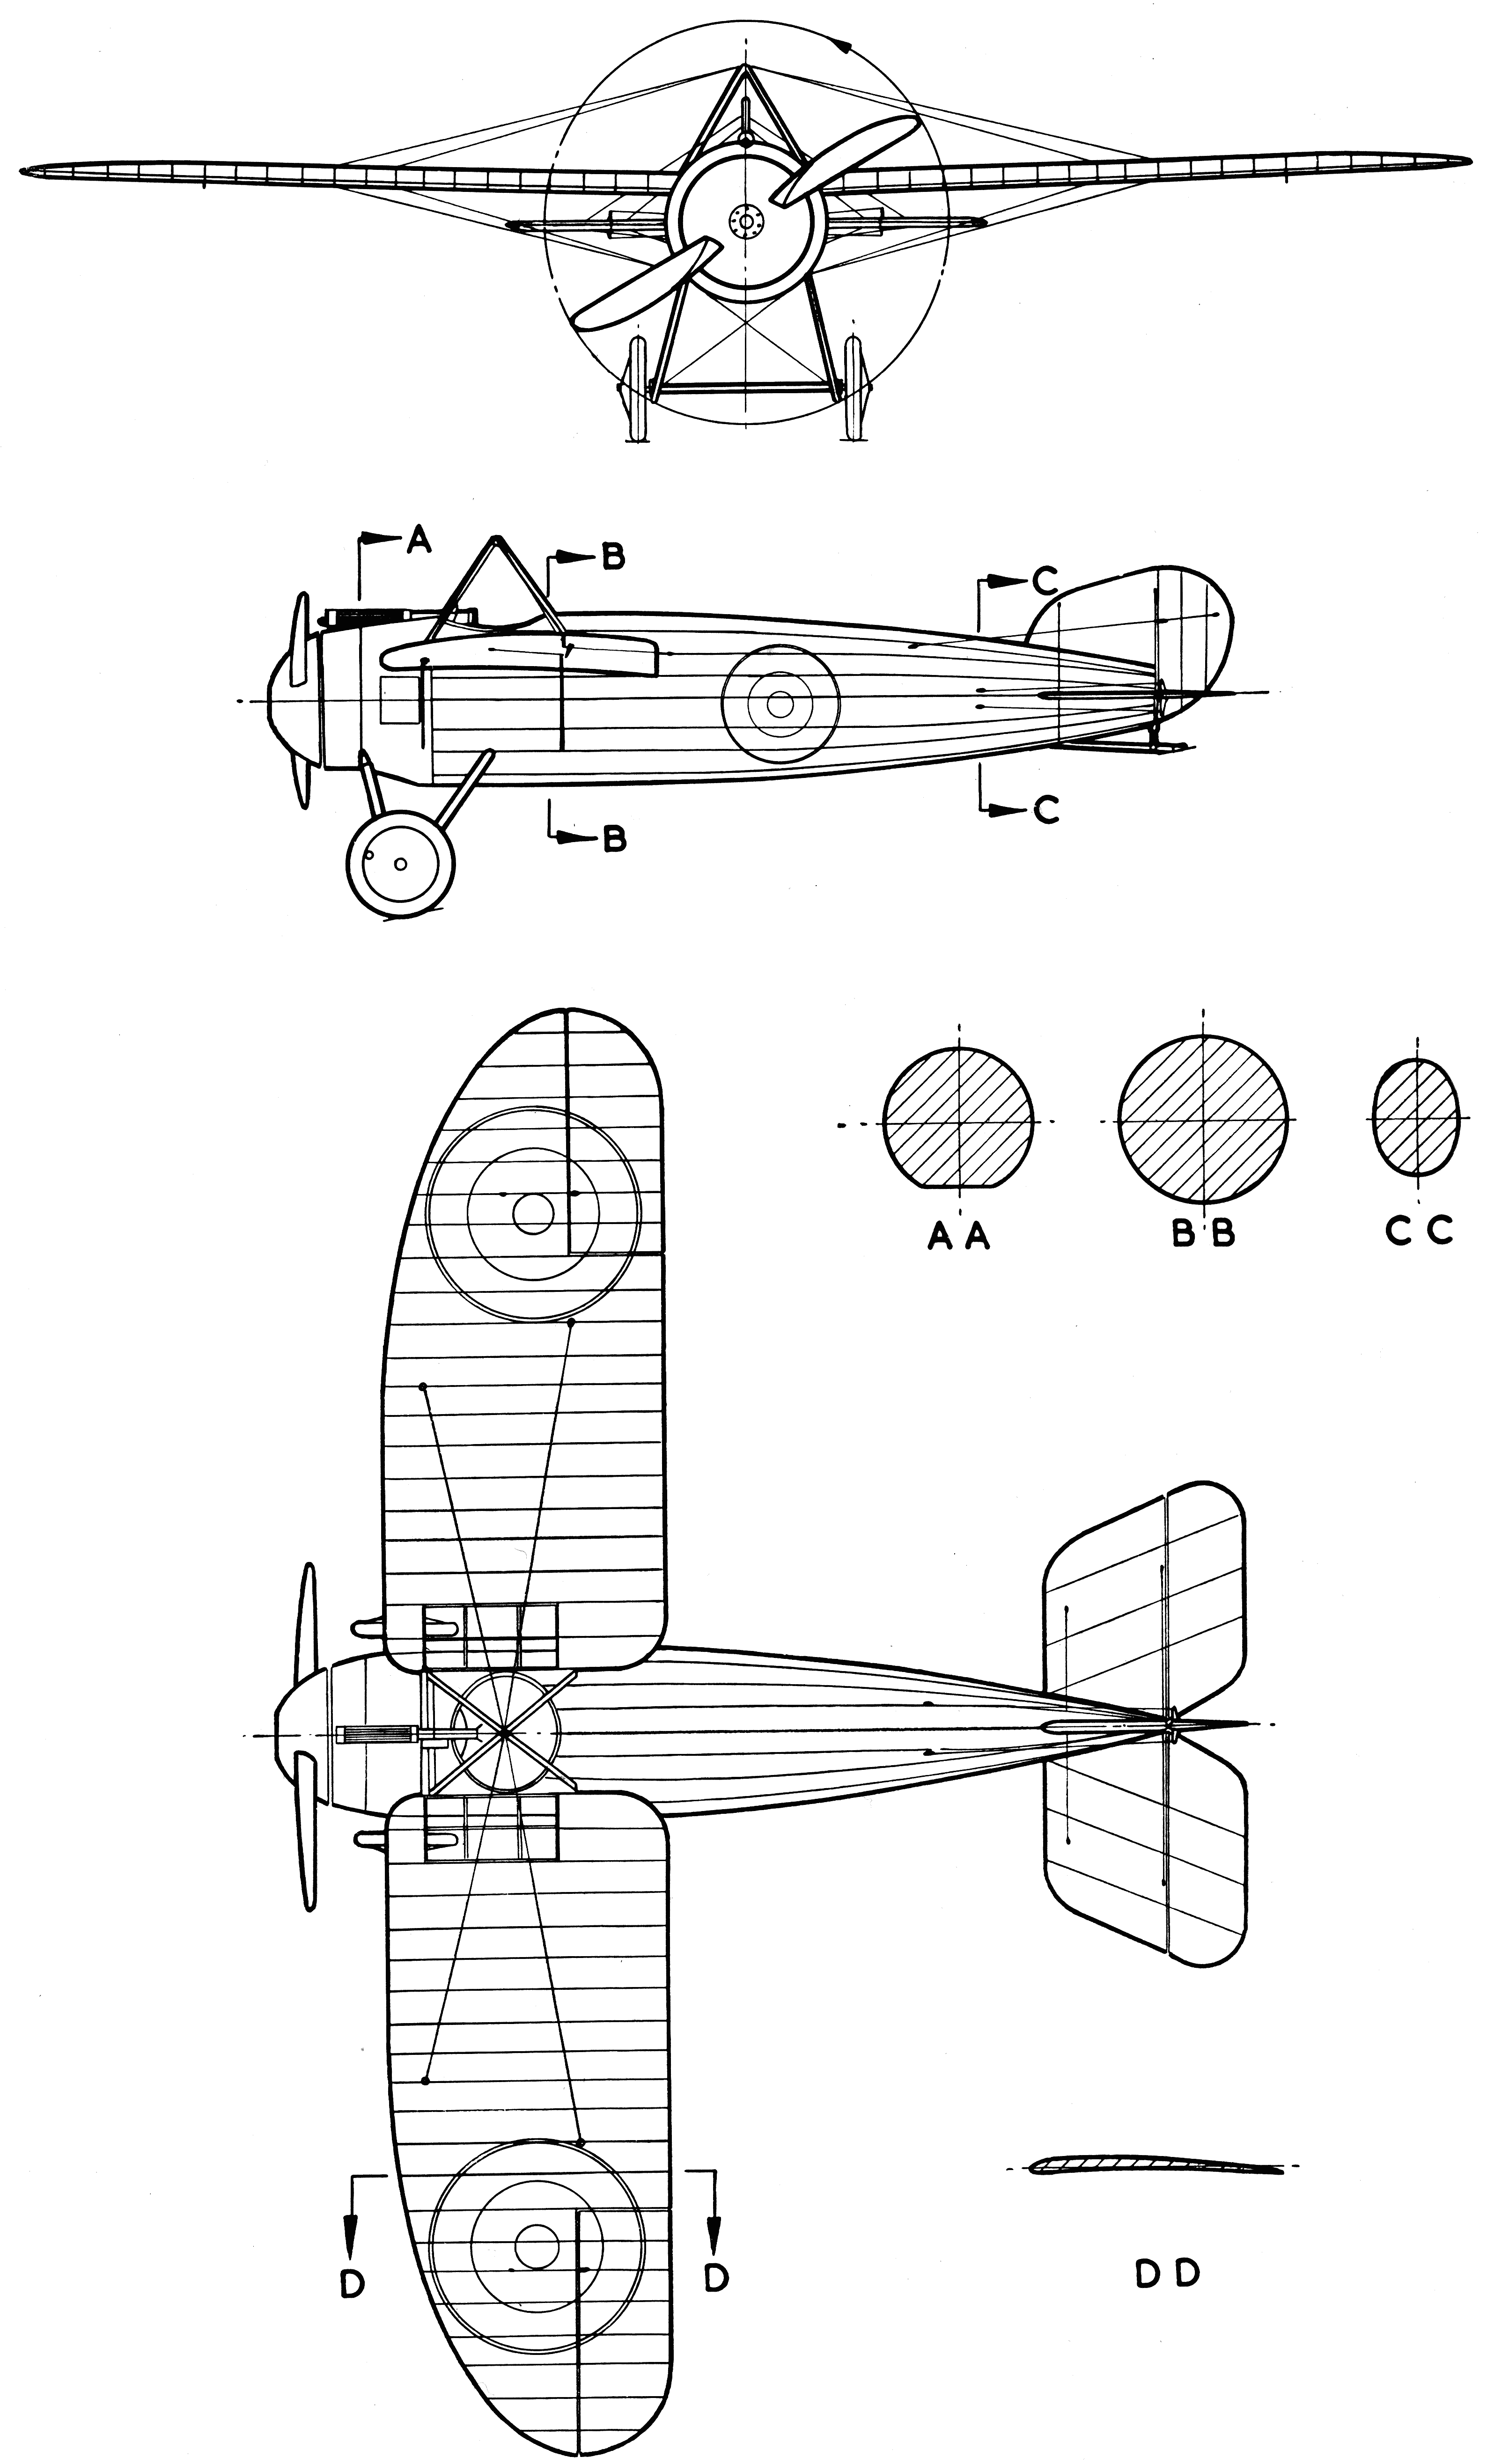 Bristol M.1 blueprint